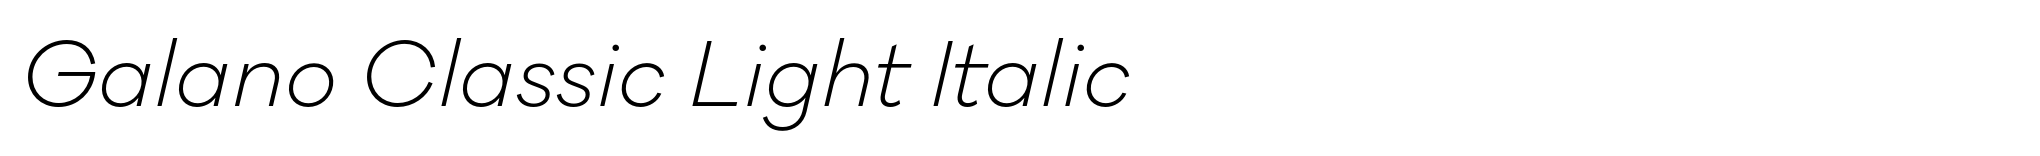 Galano Classic Light Italic image